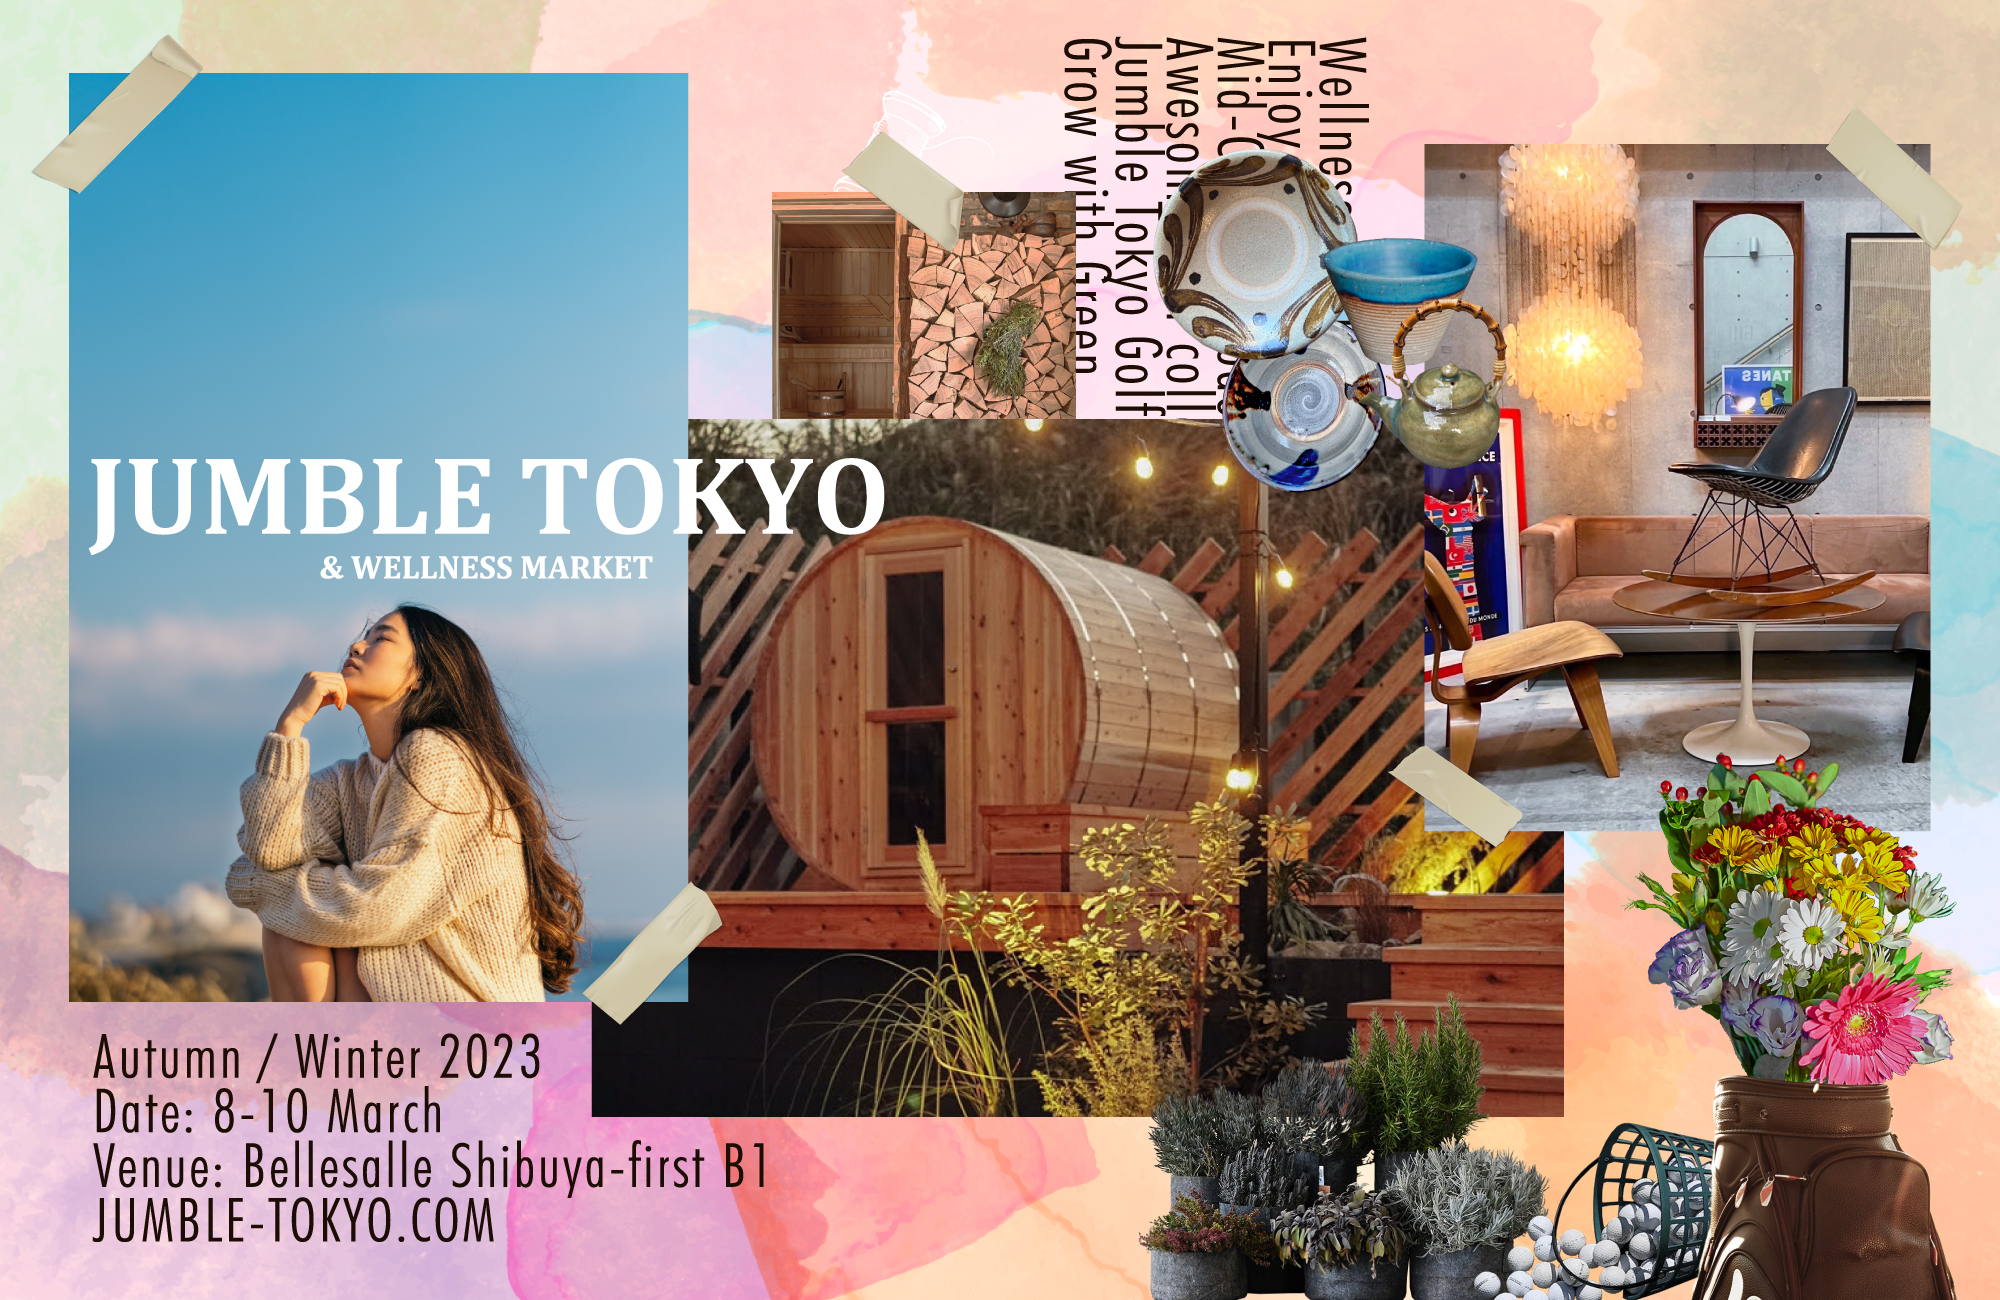 JUMBLE TOKYOのスタートは2004年秋 HOTEL CLASKA（目黒区）で始まり LAFORET MUSEUM HARAJUKU（原宿）, MODAPOLITICA（青山）, ベルサール原宿(外苑),そして2013年度より海外ブランドの出展に対応する為、会場をベルサール渋谷ファースト(渋谷)に移しました。
出展企業も90社を超え、約200ブランドの商品が並びます。